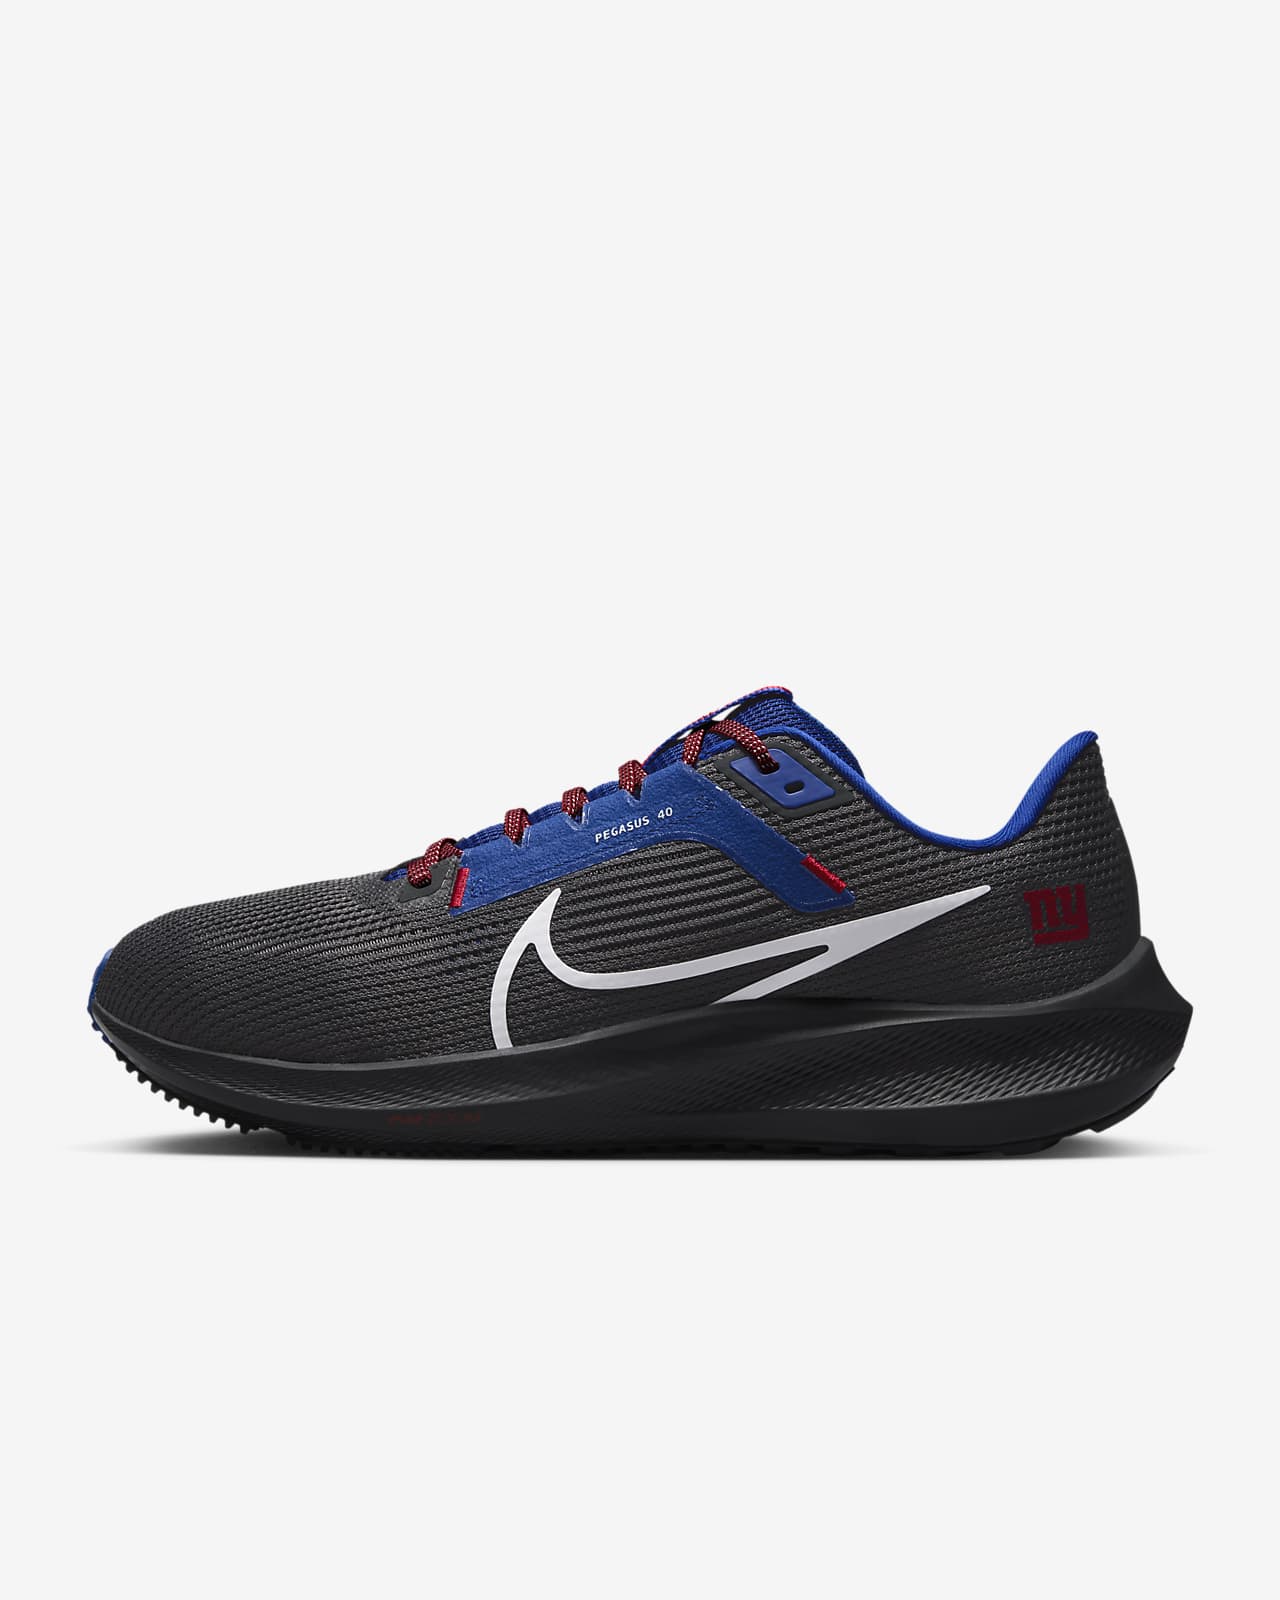 Nike Pegasus 40 (NFL New York Giants) Men's Road Running Shoes